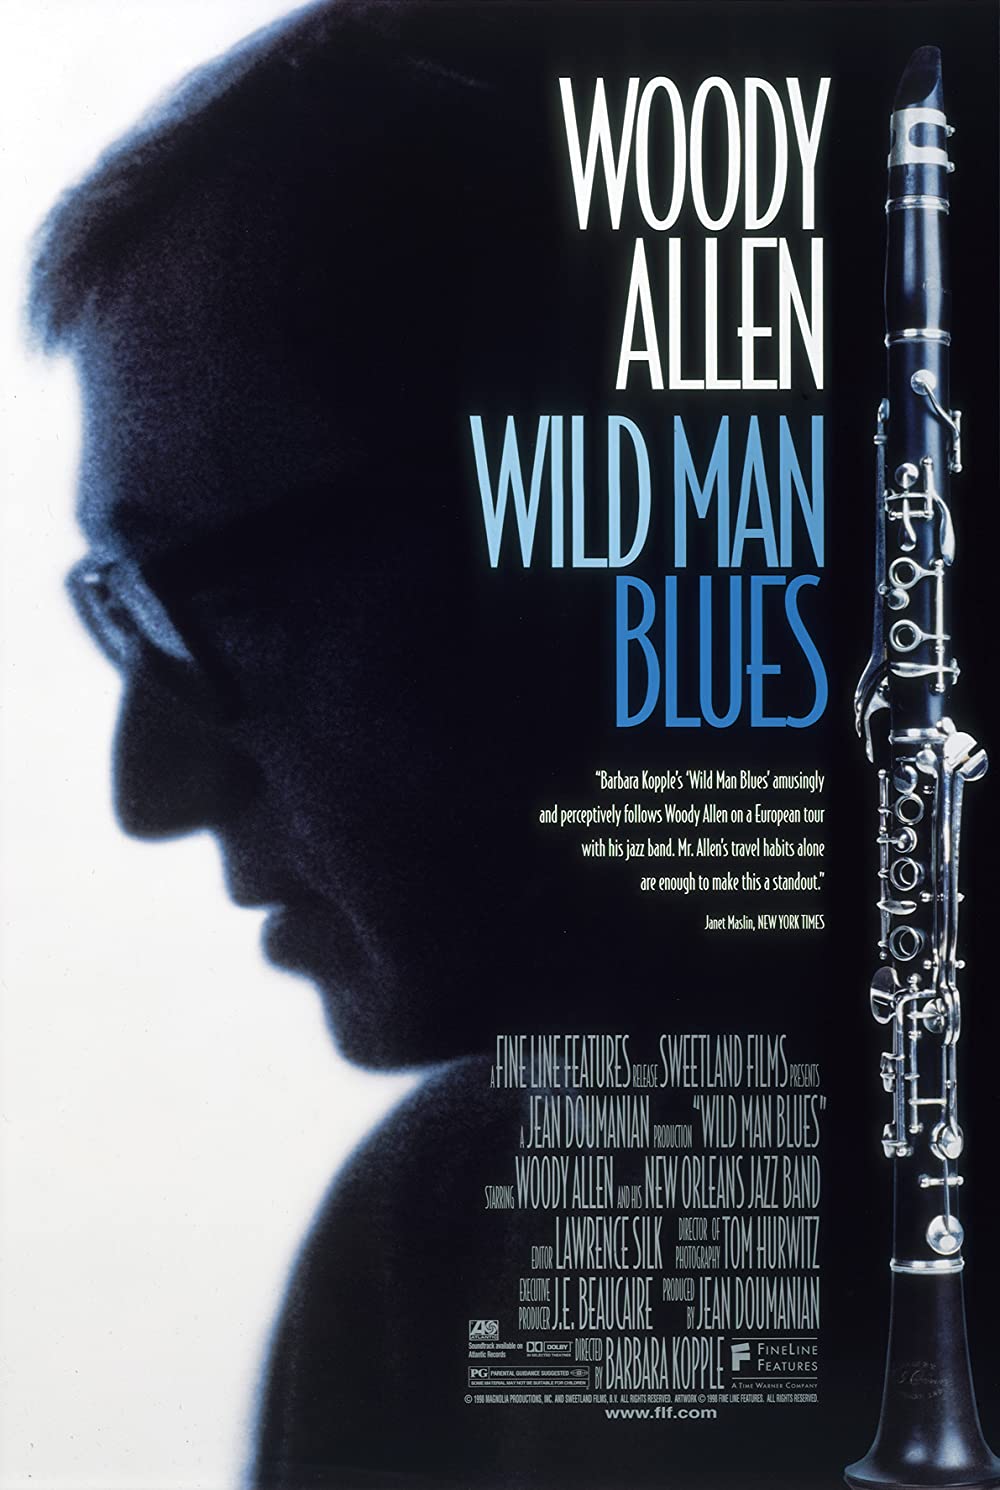 Wild man blues - Woody Allen